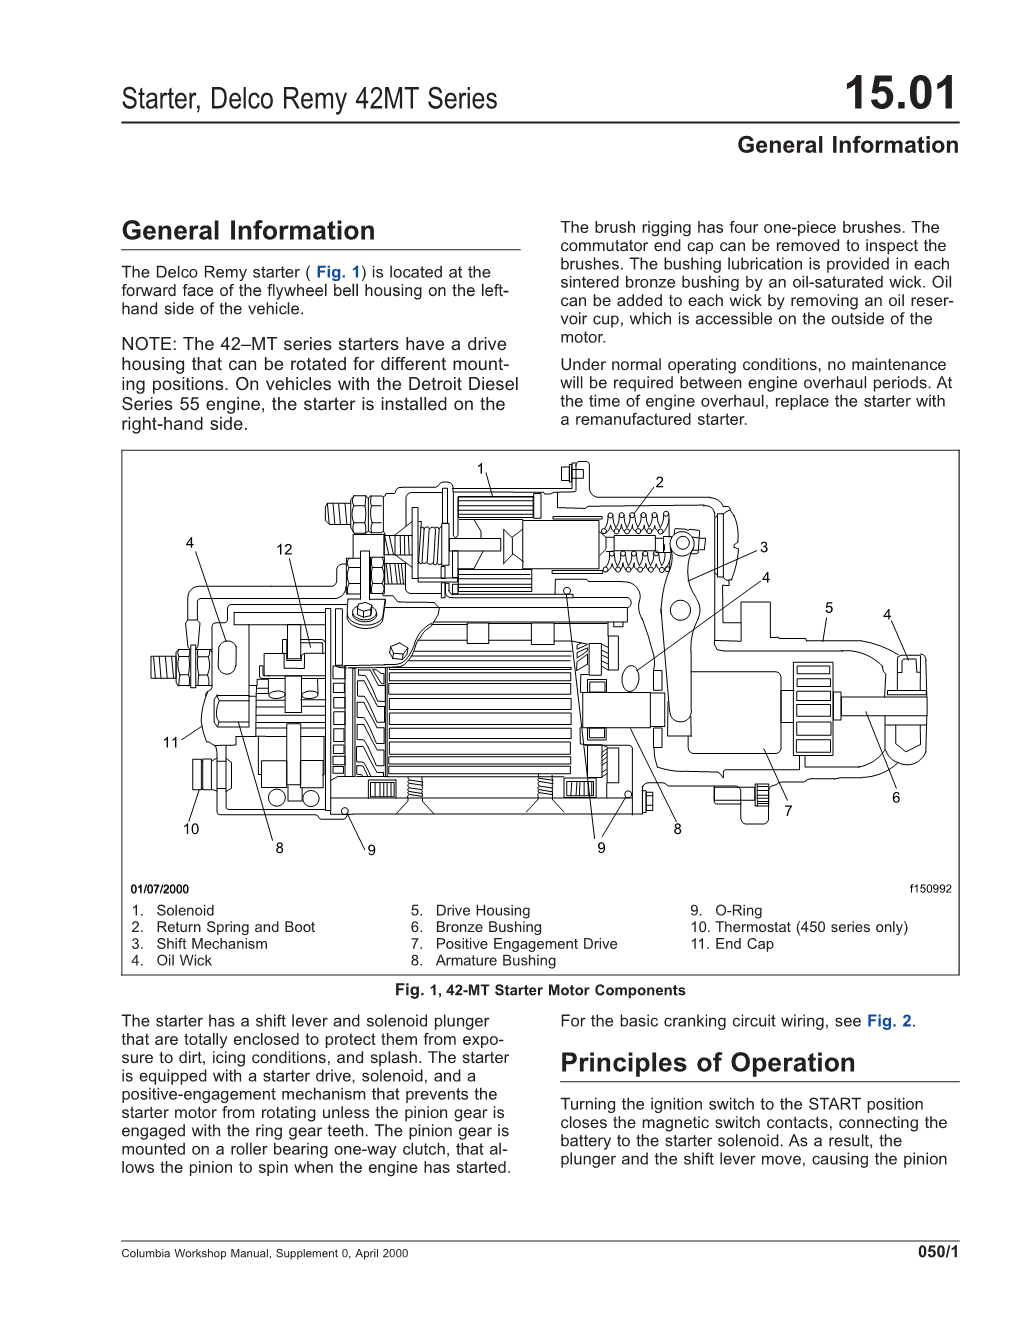 Starter, Delco Remy 42MT Series 15.01 General Information